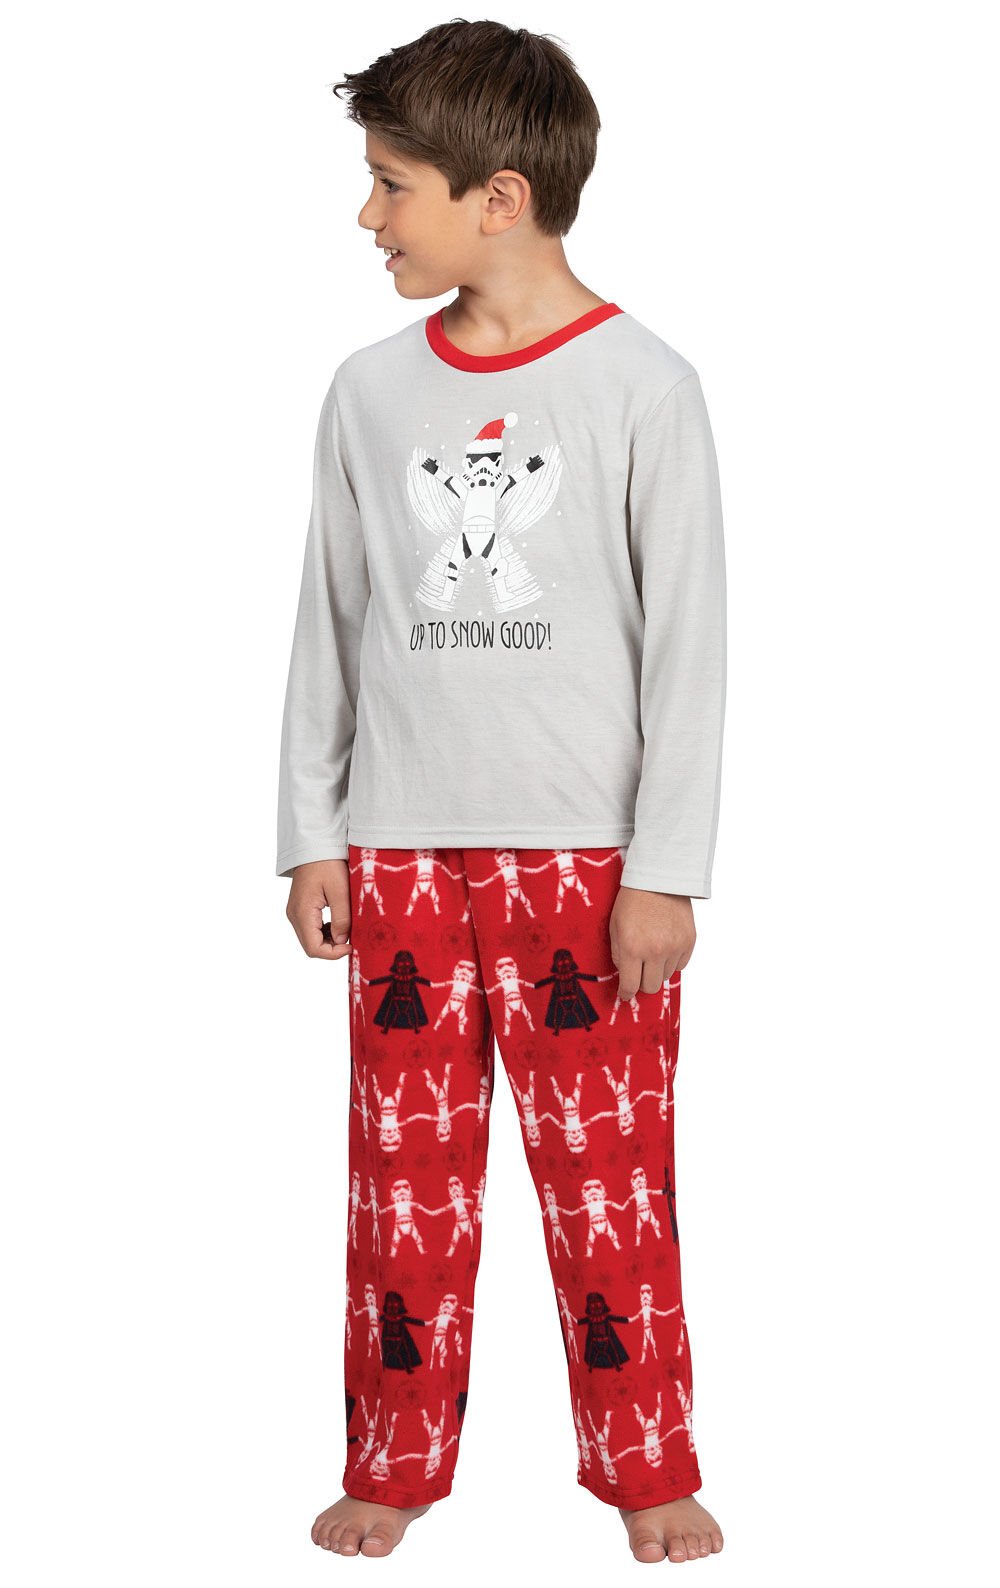 Star Wars Stormtroopers Official Gift Boys Kids Long Pyjamas 